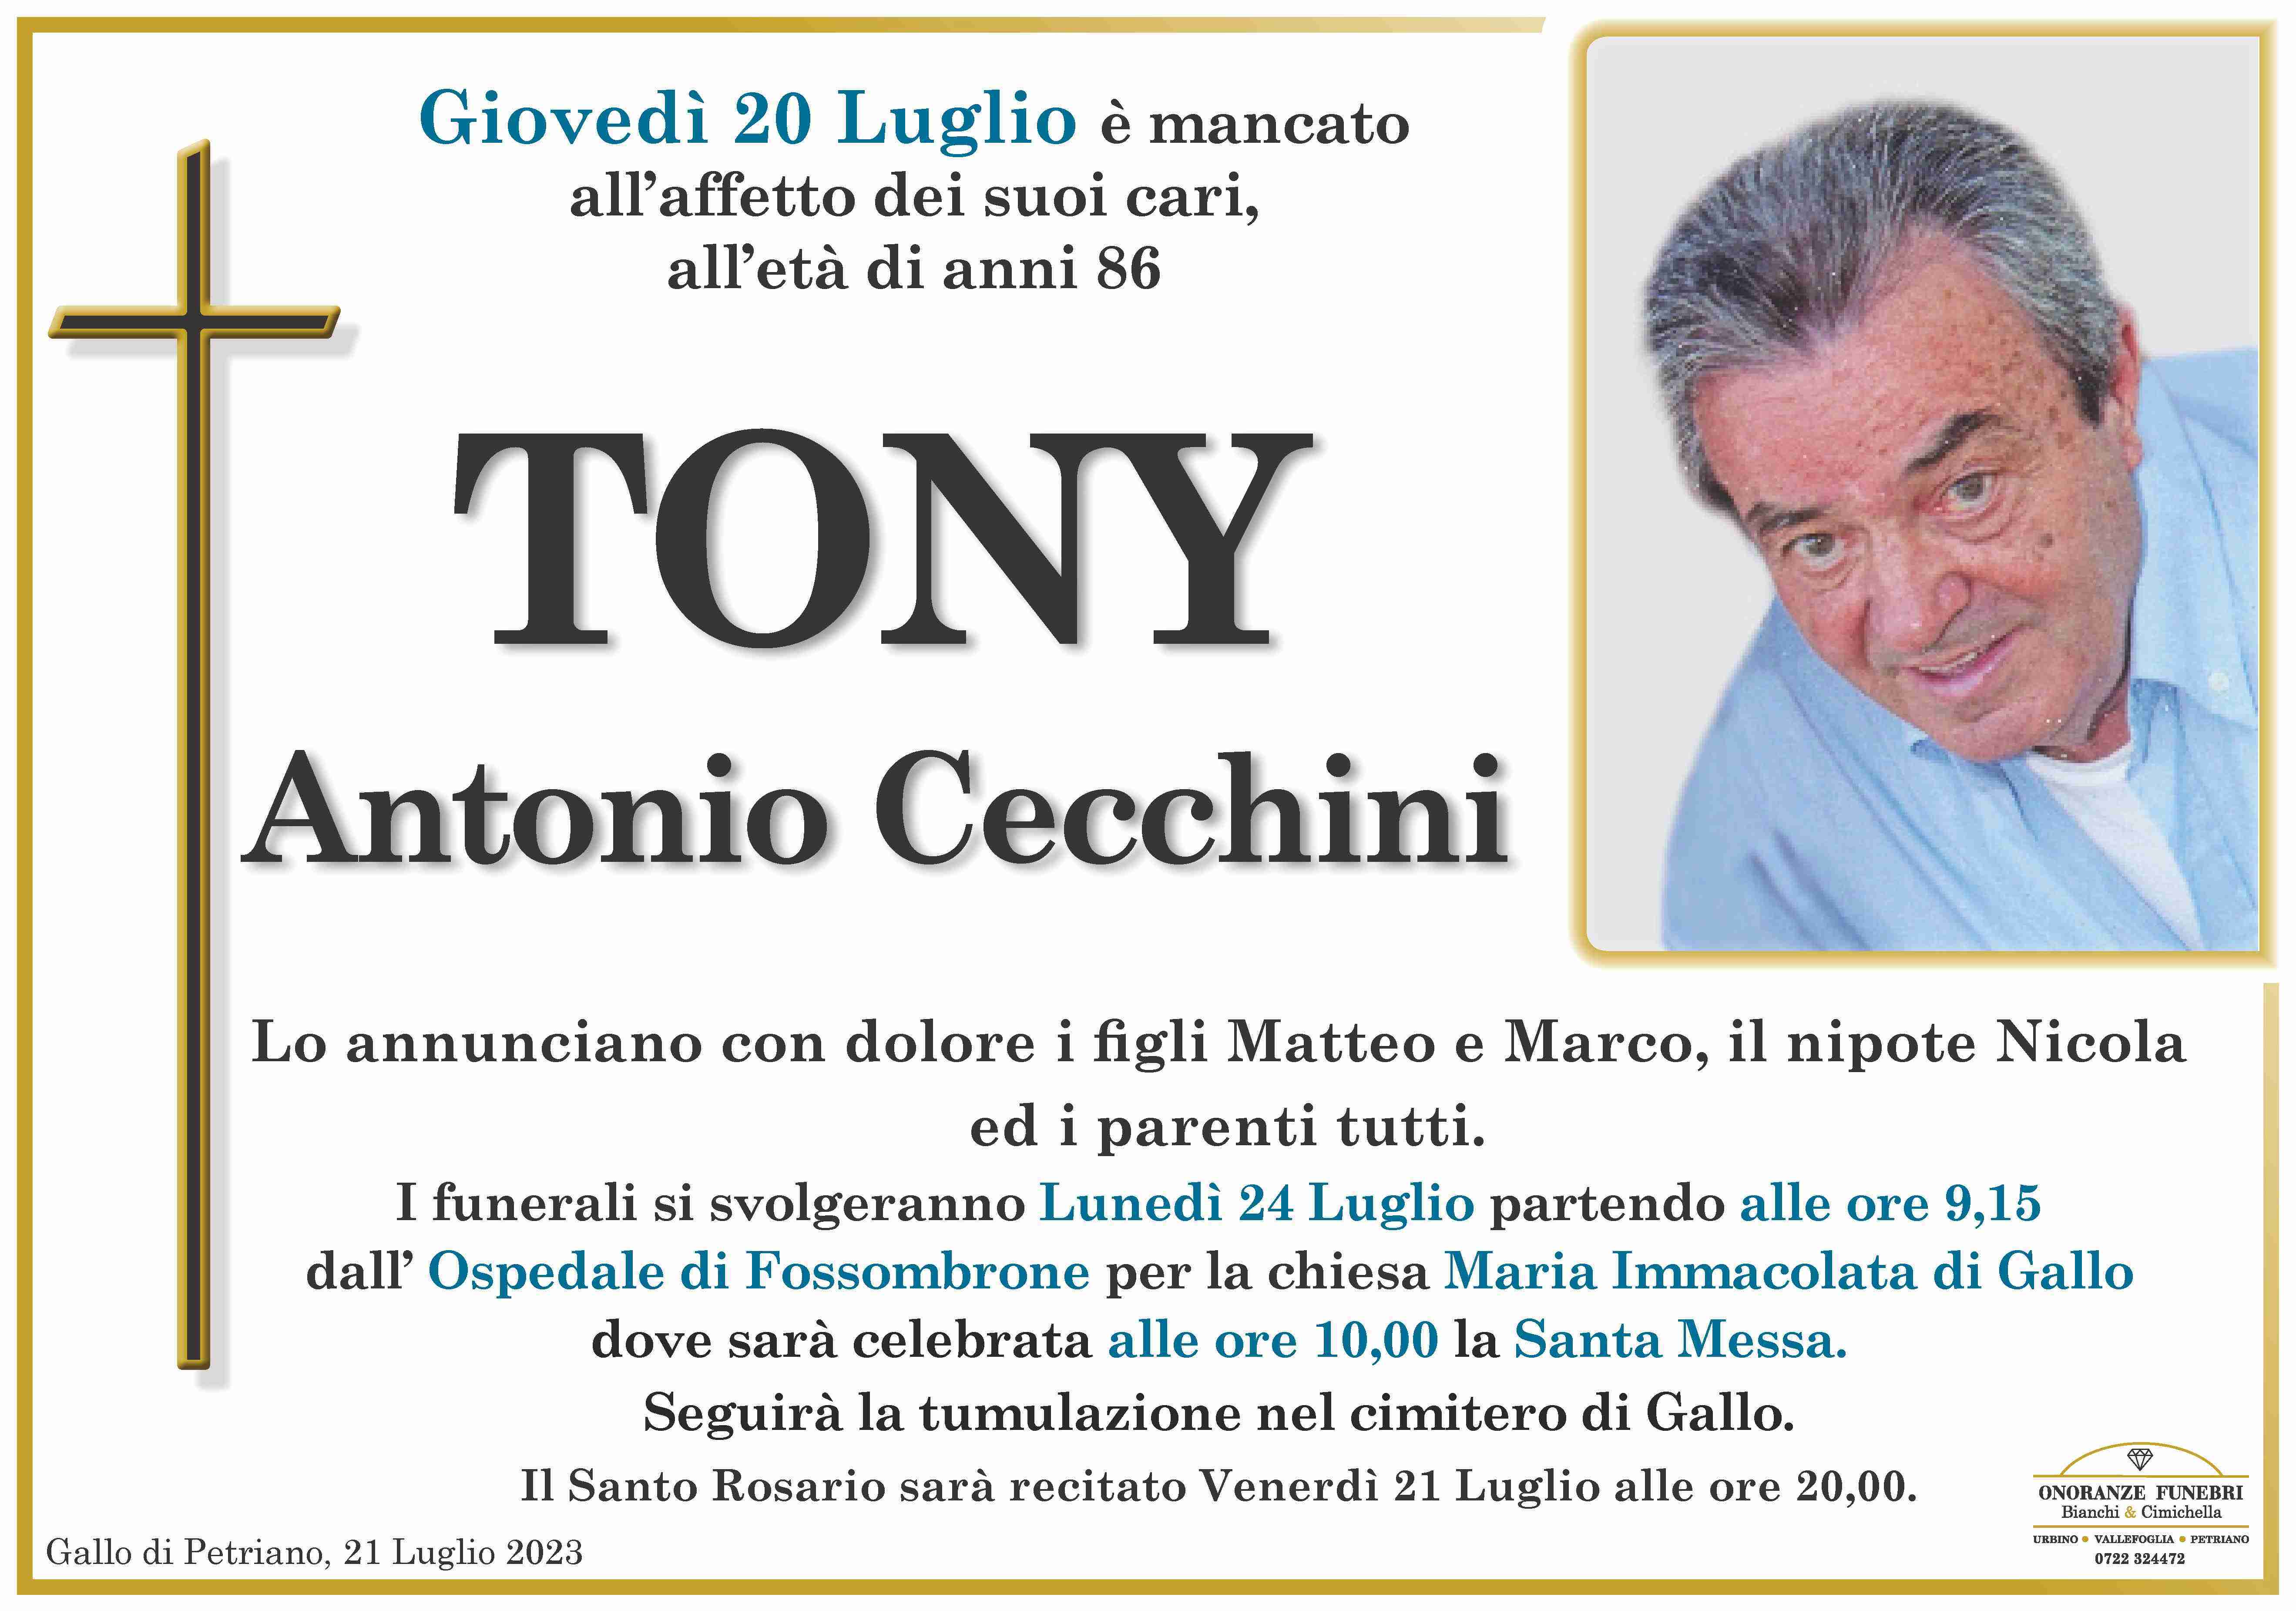 Antonio Cecchini 'TONY'